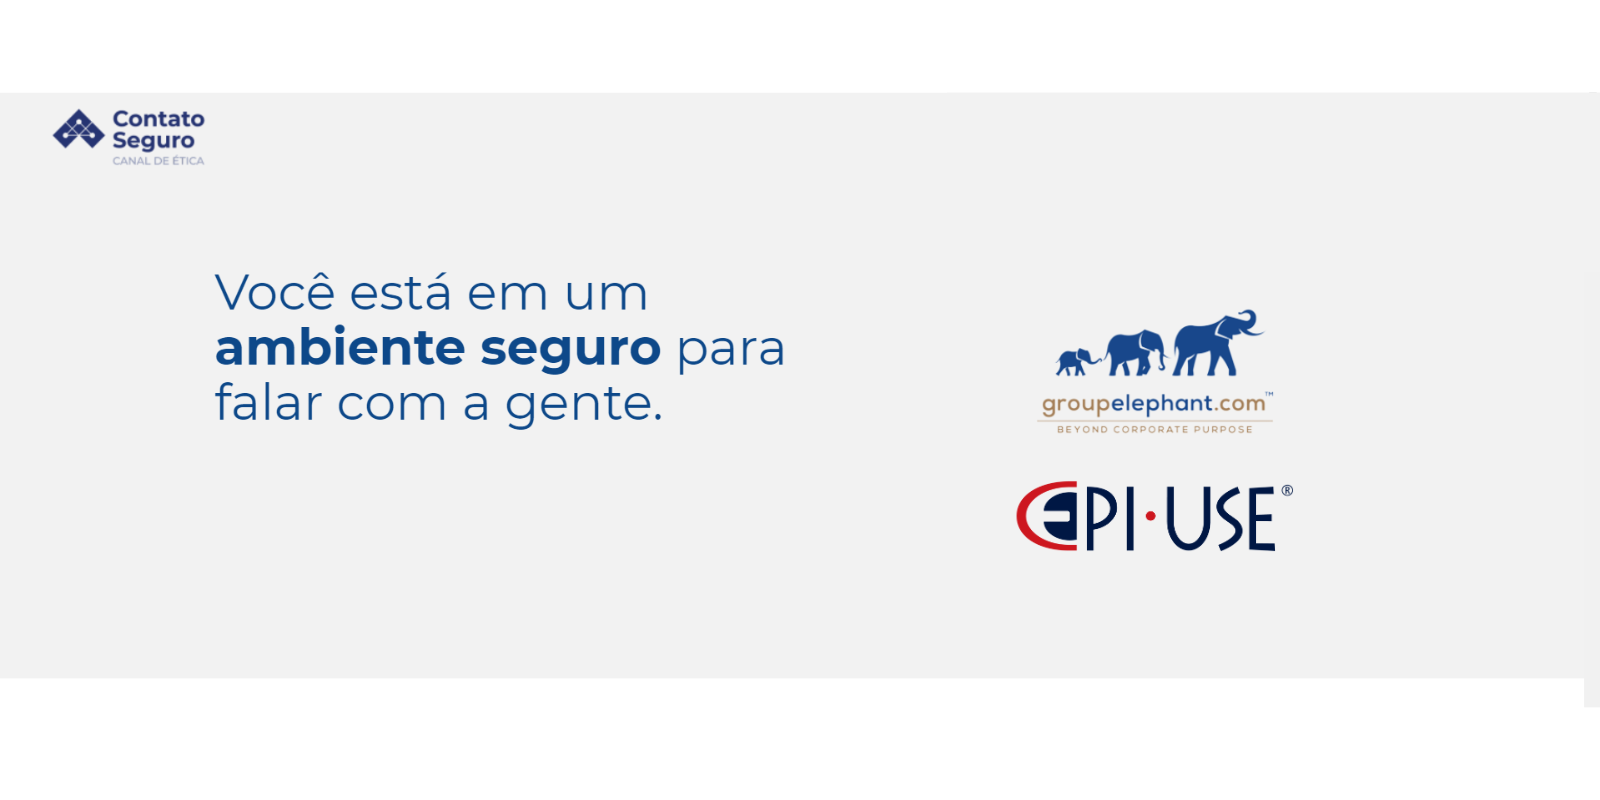 Canal de Ética EPI-USE Brasil